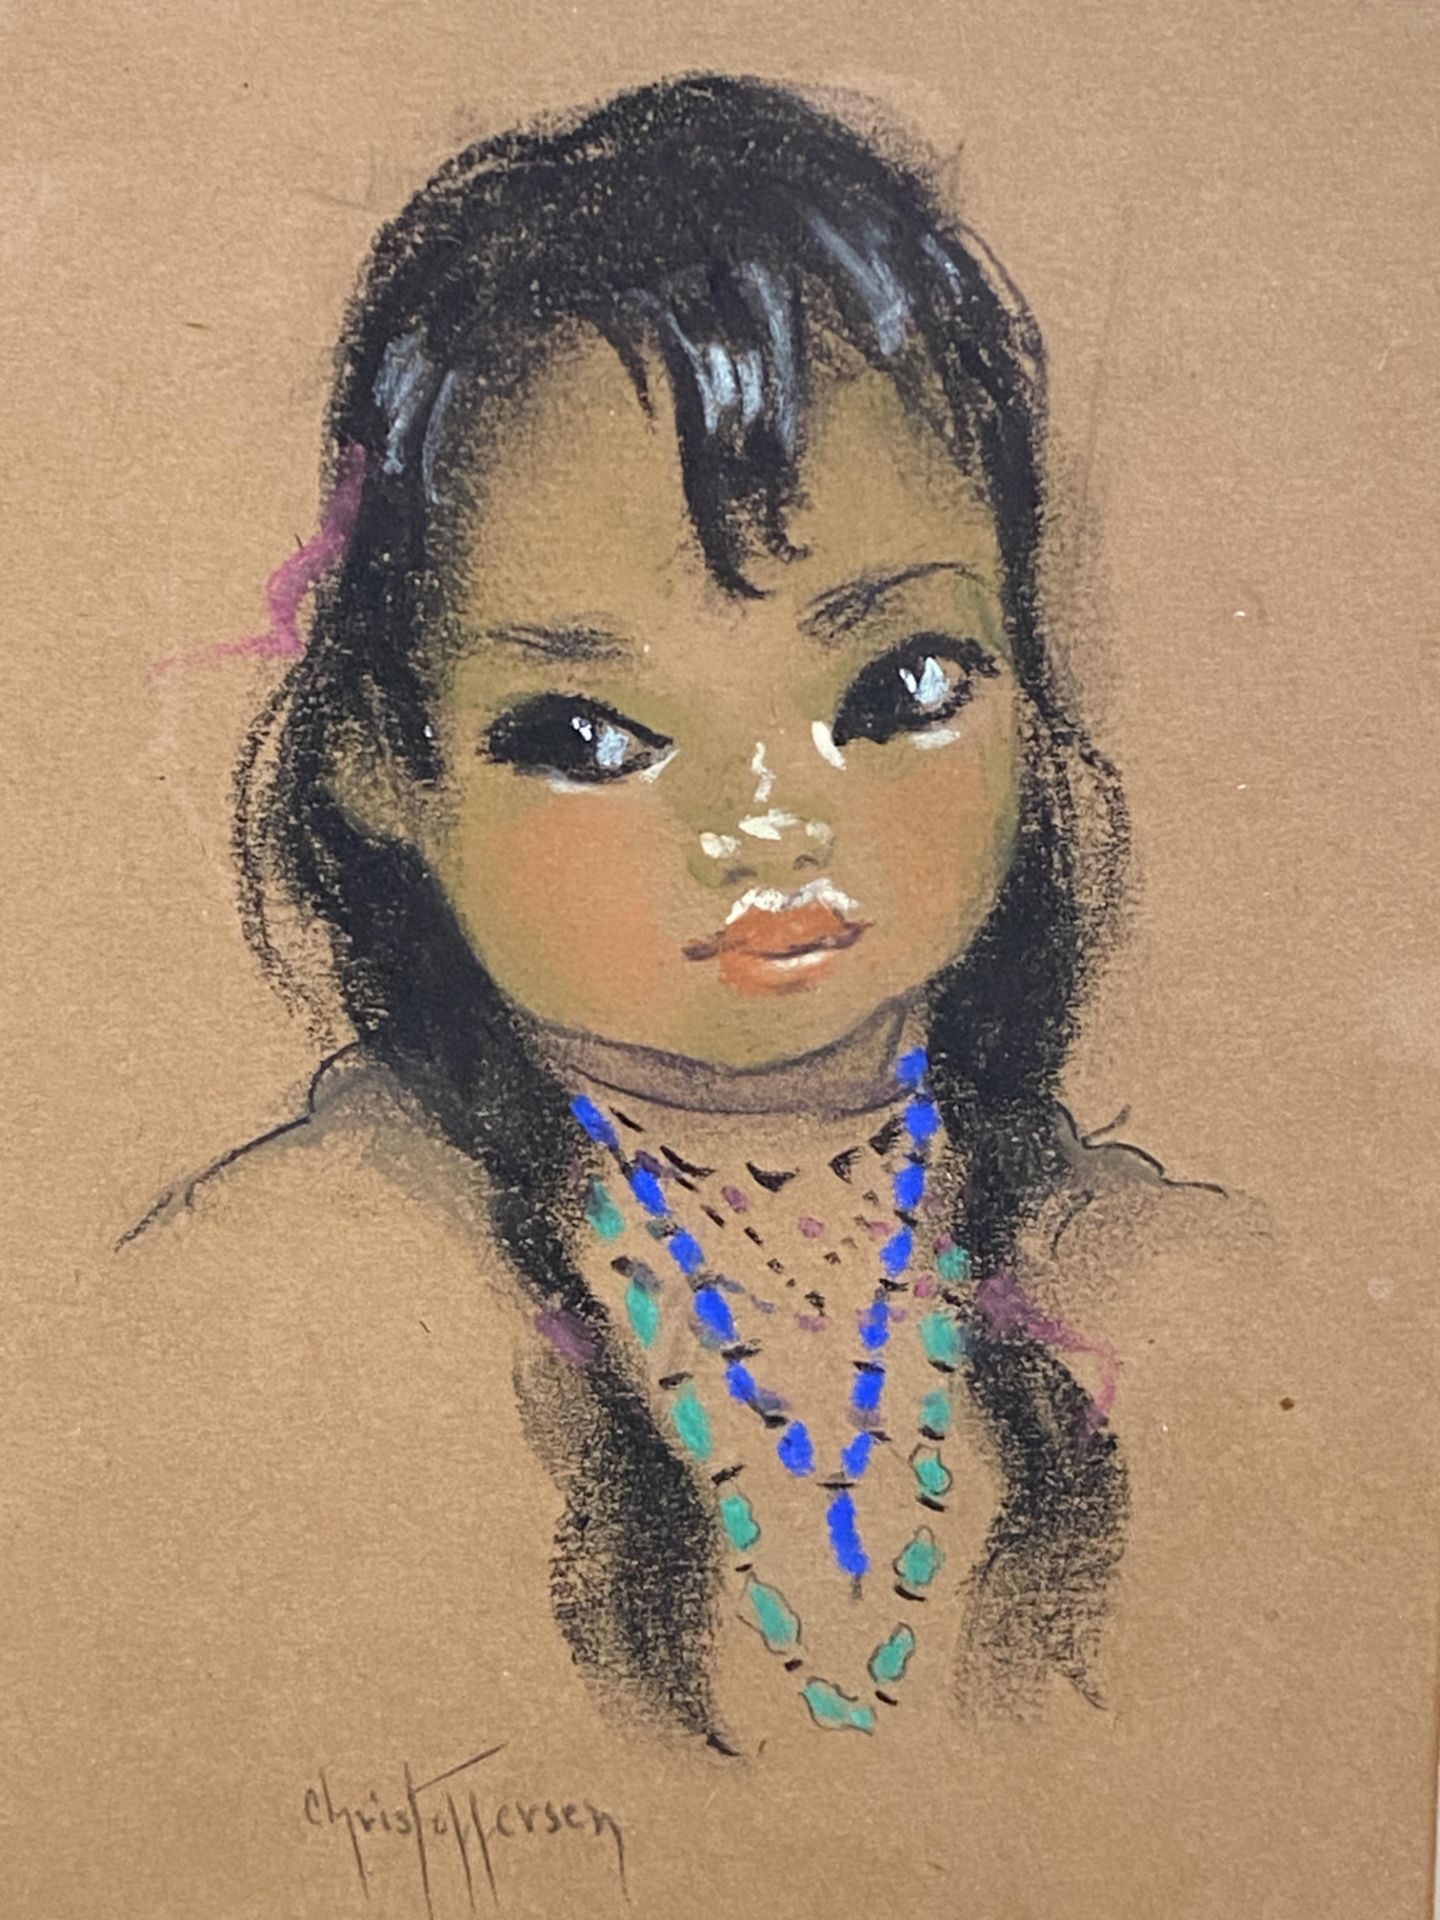 Framed and glazed pastel of a girl, signed Christofferson